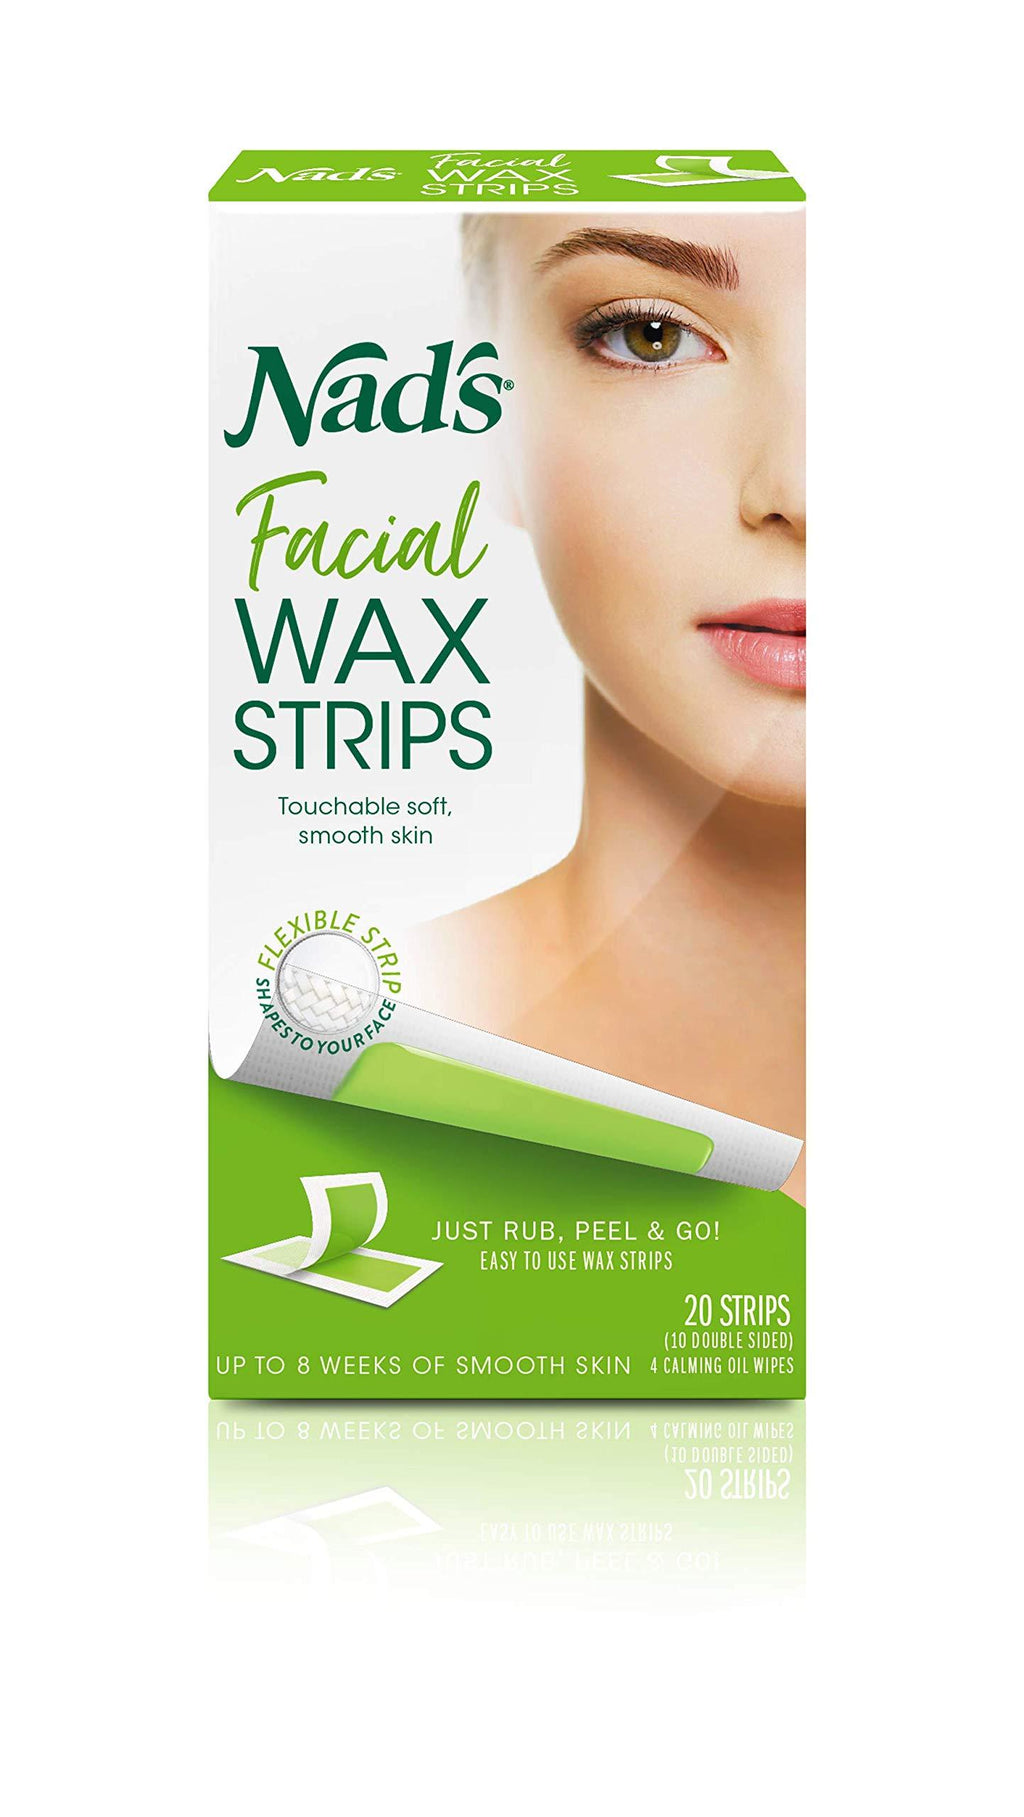 100 Large Wax Waxing Wood Body Hair Removal Sticks Applicator Spatula